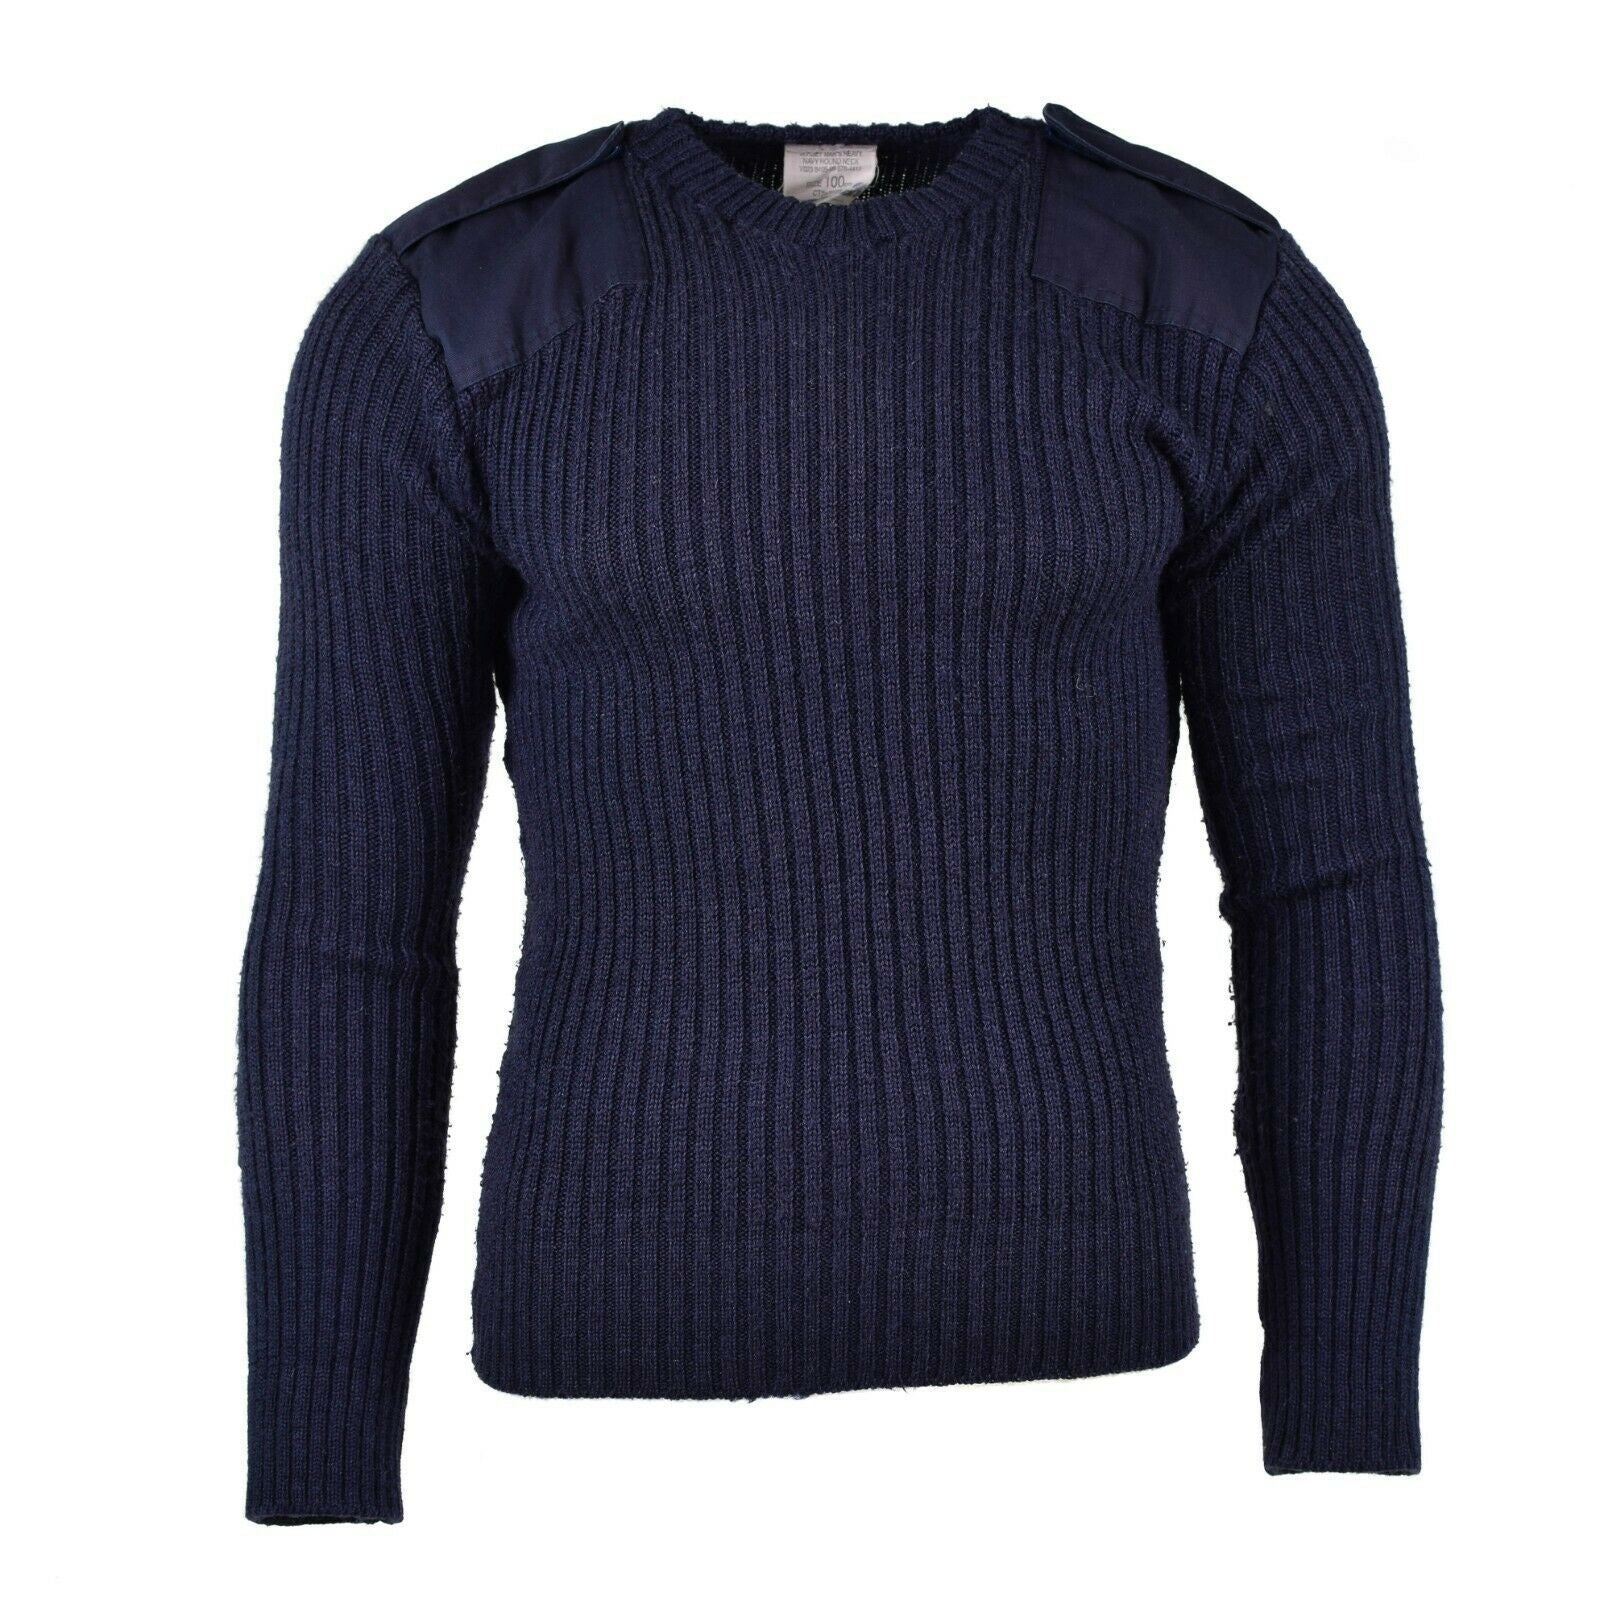 Original British Army Navy Blue sweater Commando Jumper pullover Round ...